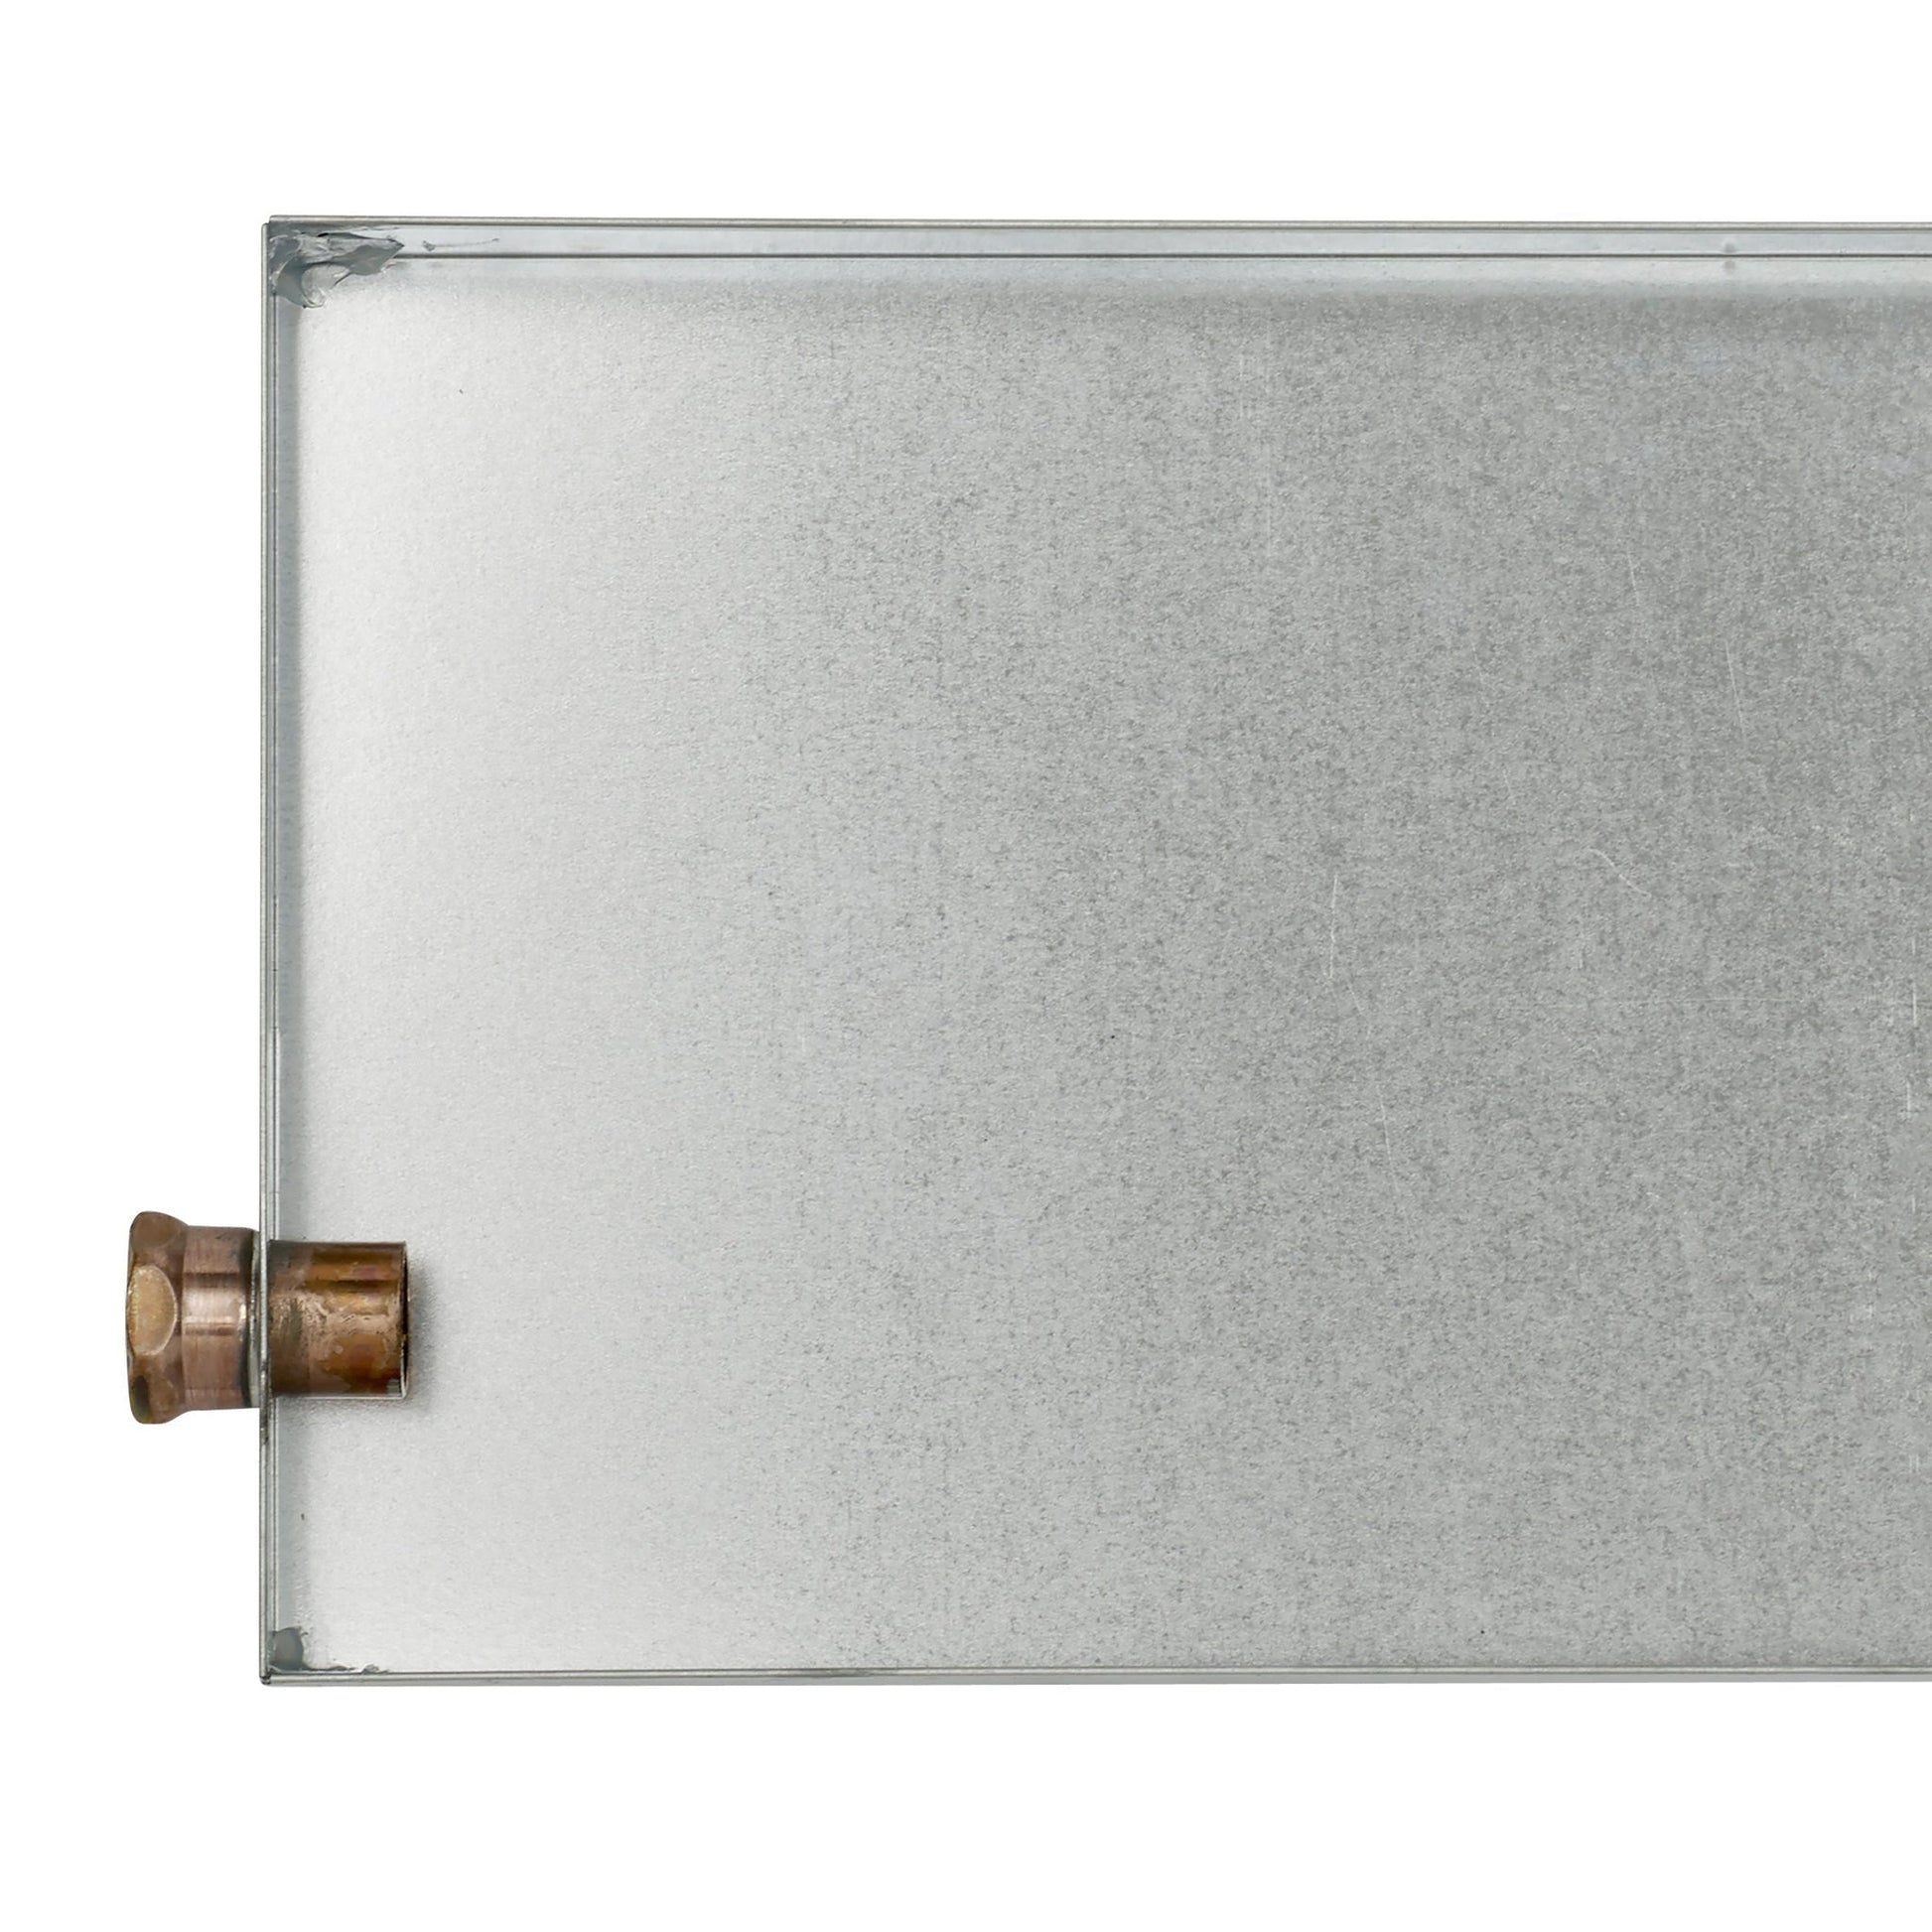 MrSteam Butler 36” x 12” x 12” Oil Rubbed Bronze Max Steam Generator Control Kit Package in Round with Autoflush, Condensation Pan, Steamlinx, Steamhead